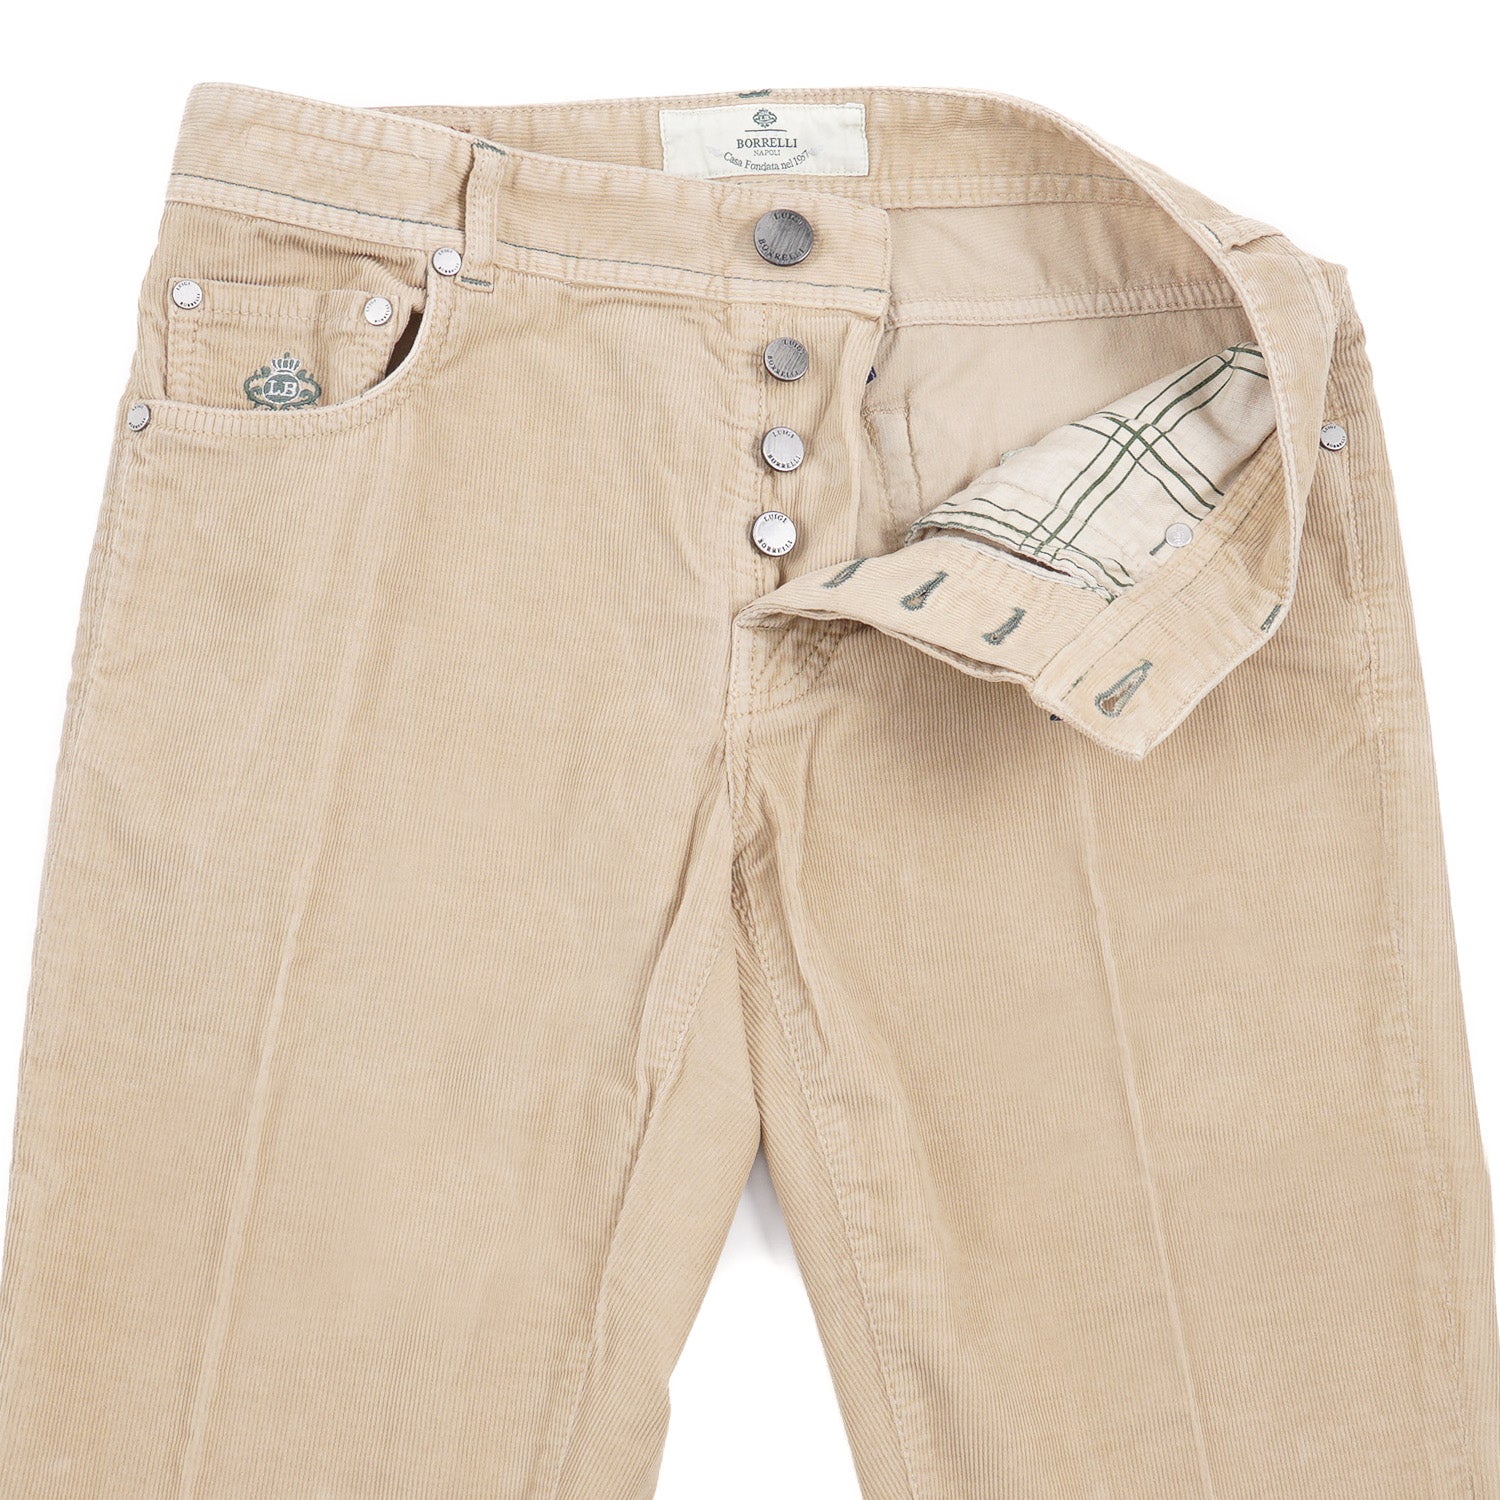 Luigi Borrelli Corduroy 5-Pocket Pants - Top Shelf Apparel